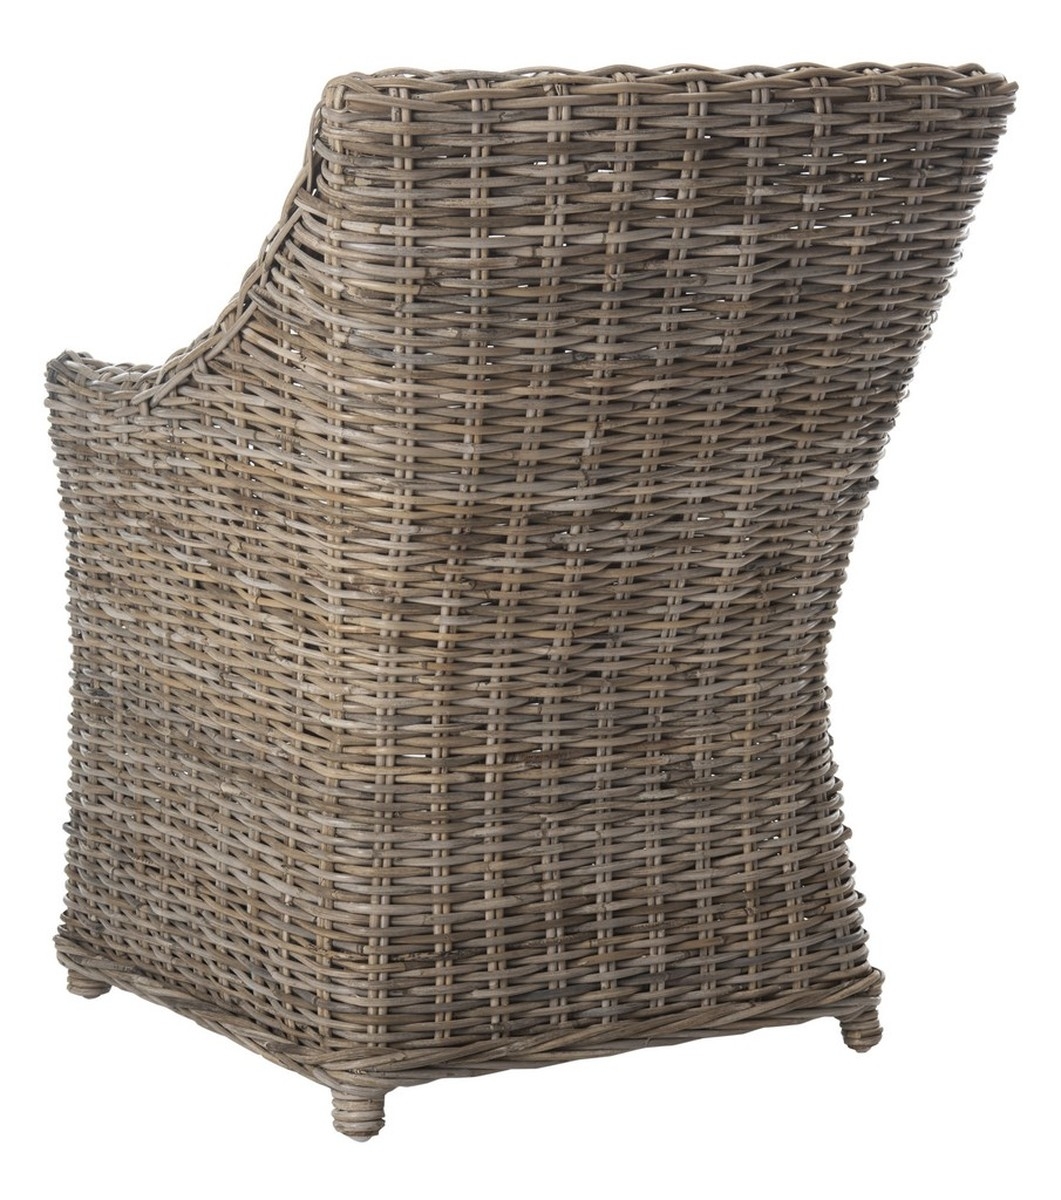 Ventura Rattan Arm Chair - Brown/White - Arlo Home - Image 3